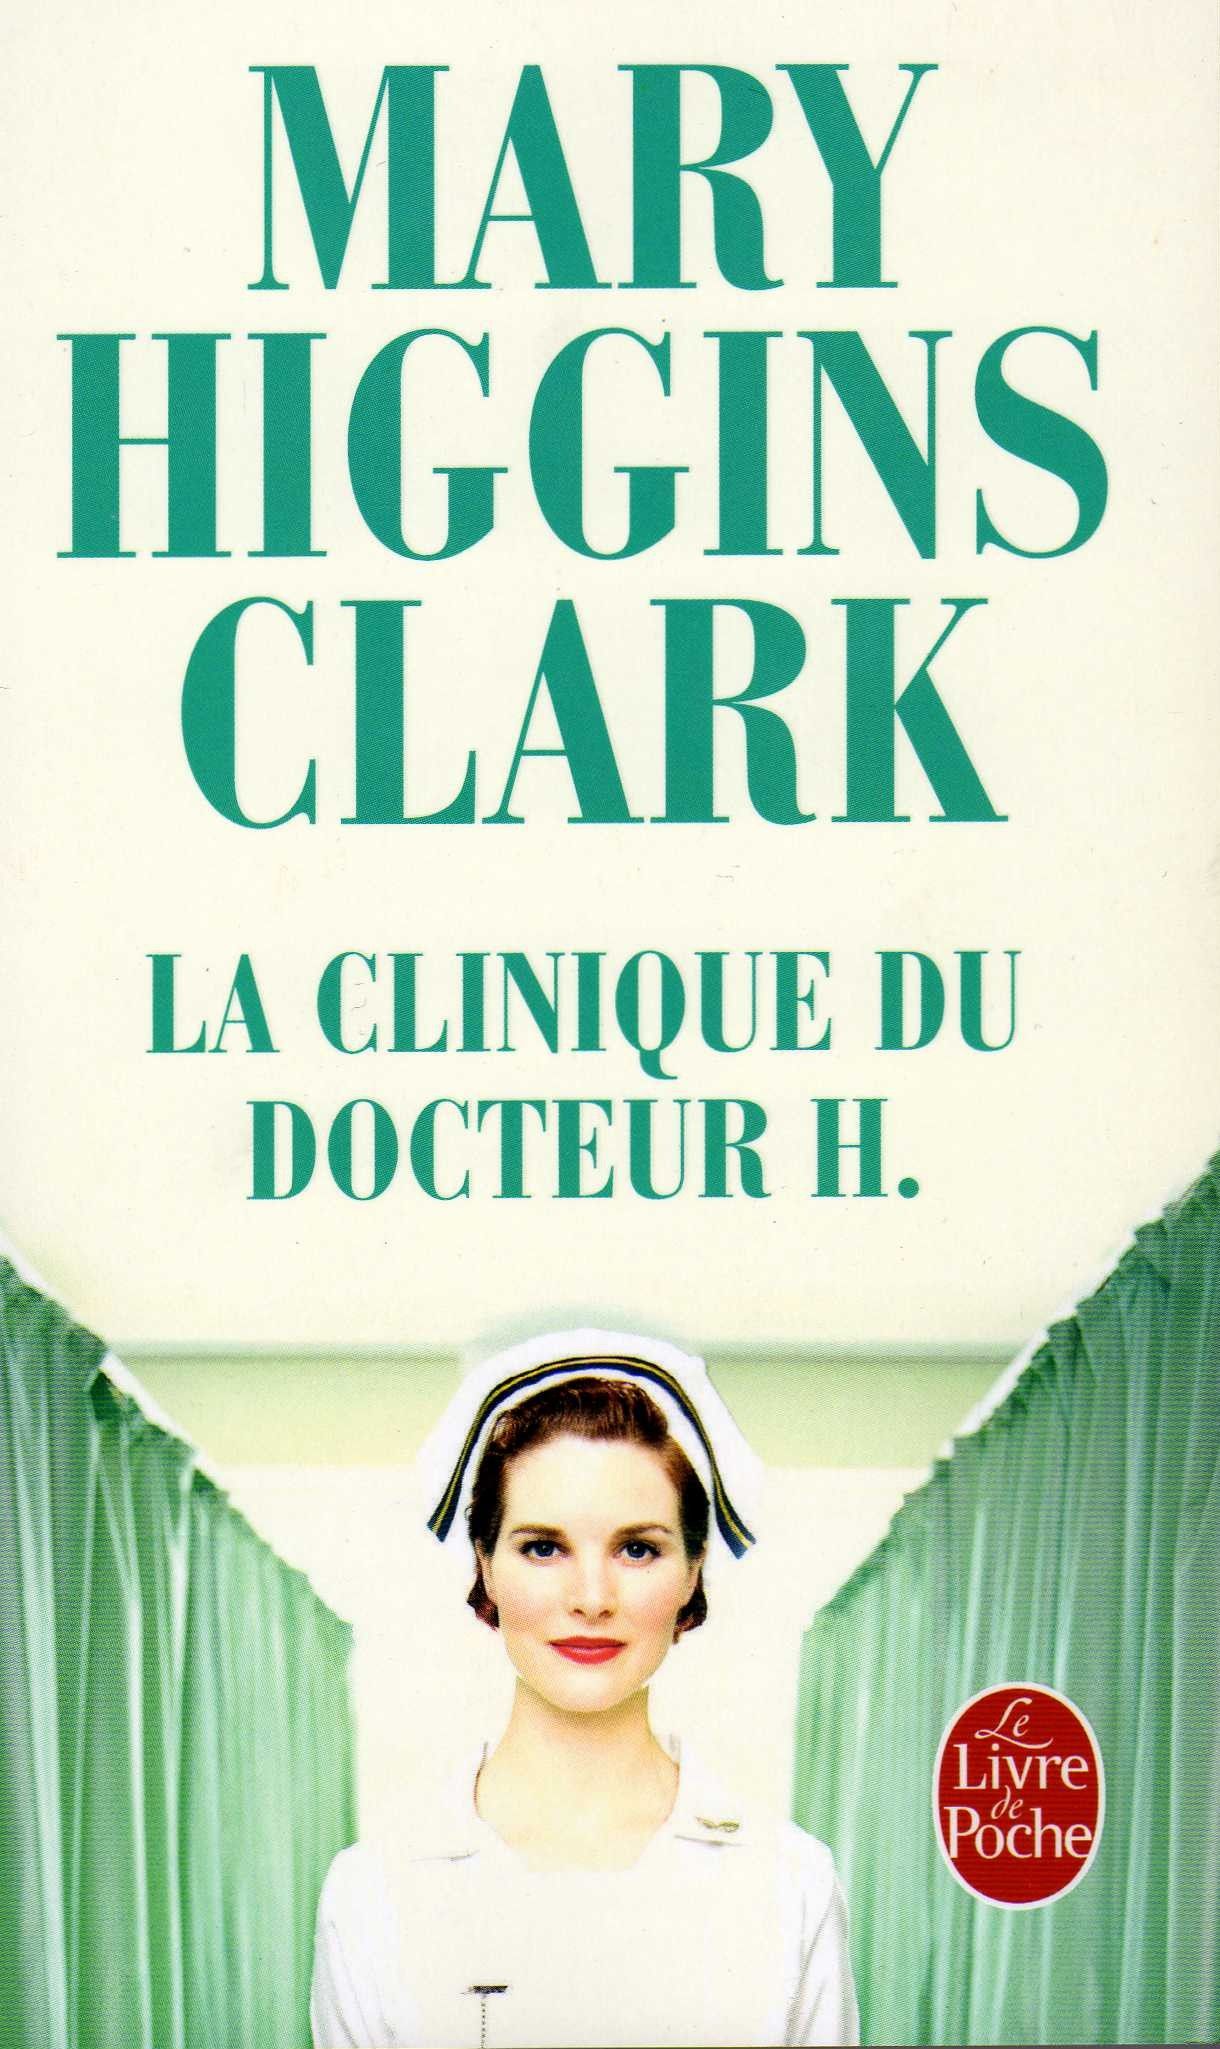 La Clinique du Docteur H. - Mary Higgins Clark - SensCritique1220 x 2049